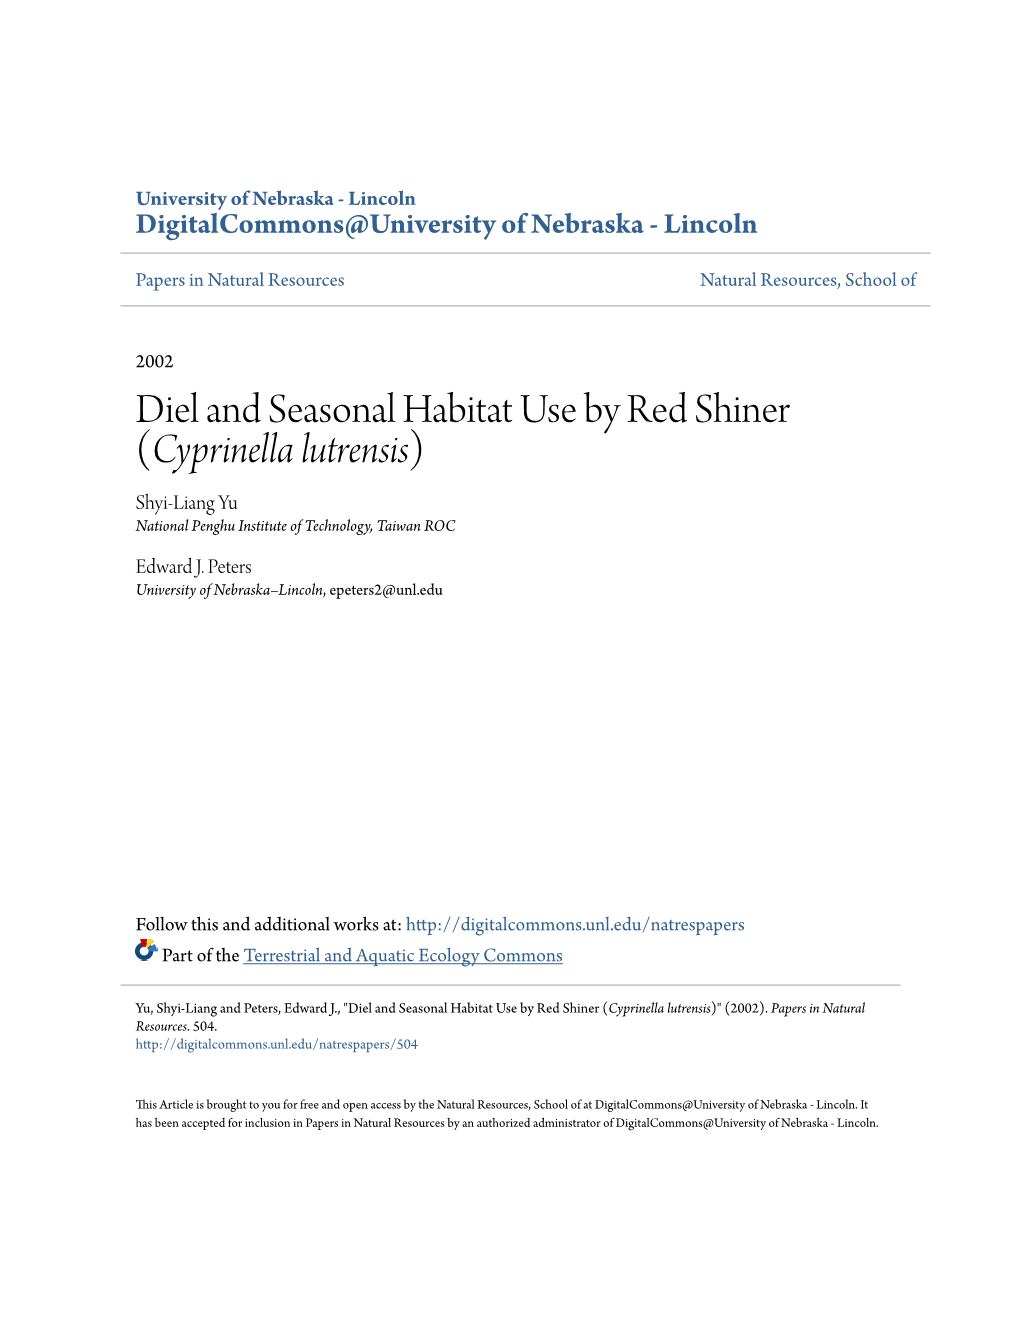 Diel and Seasonal Habitat Use by Red Shiner (&lt;I&gt;Cyprinella Lutrensis